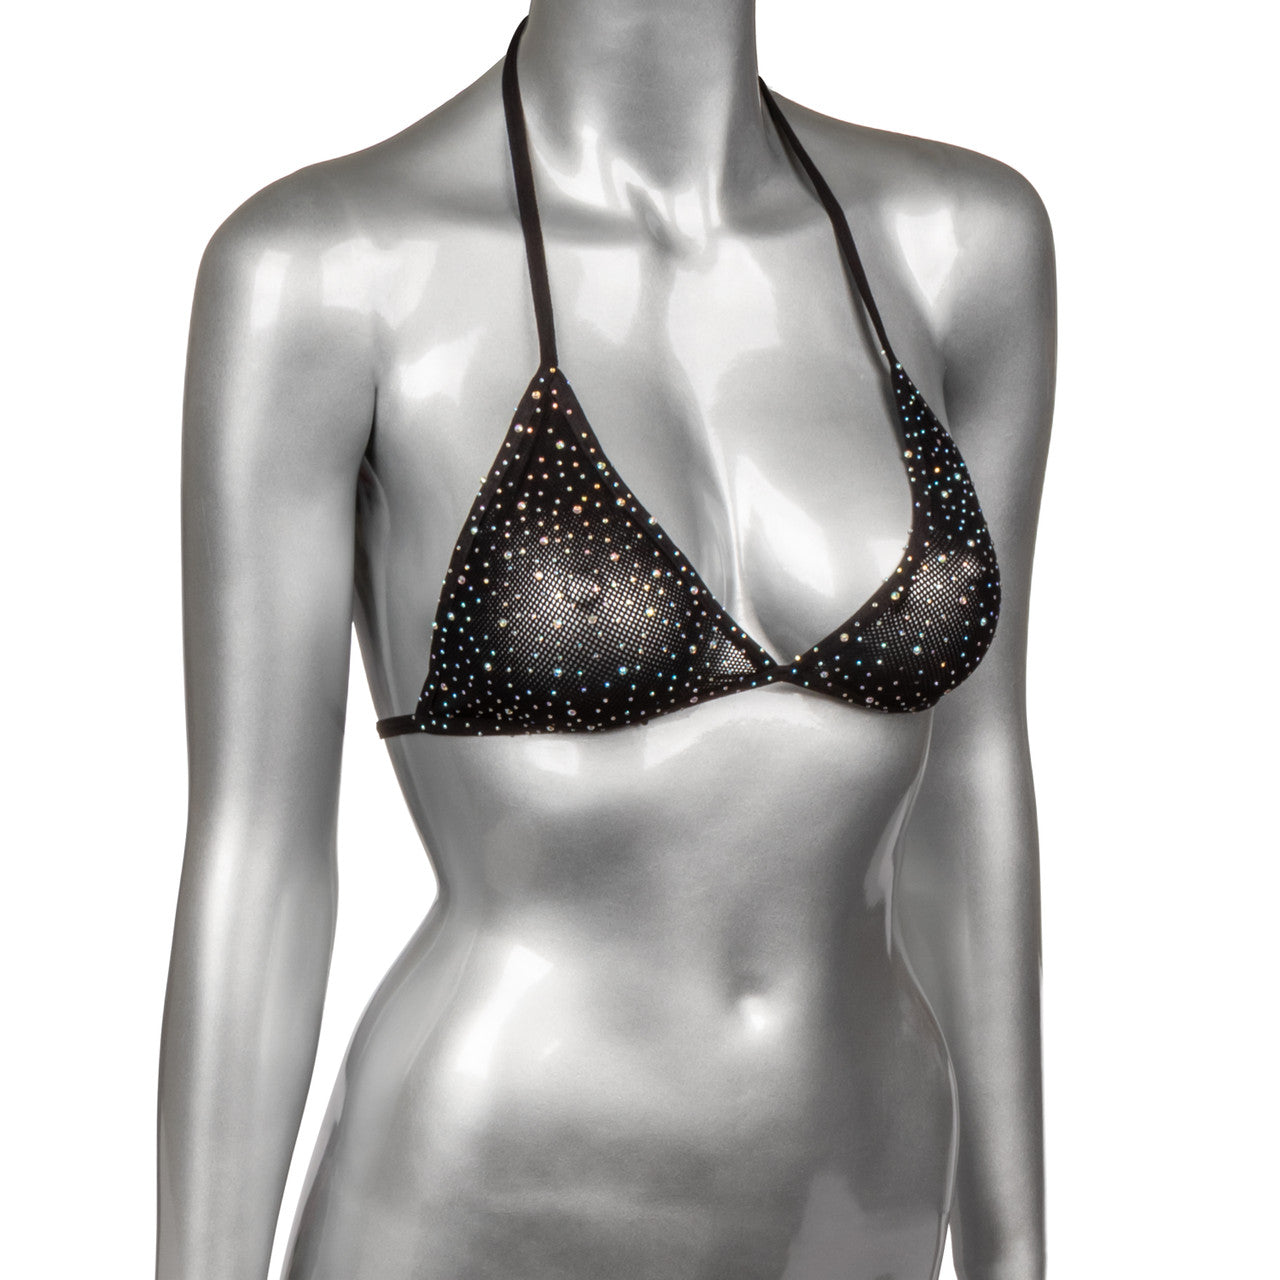 Radiance™ Triangle Bikini Top *